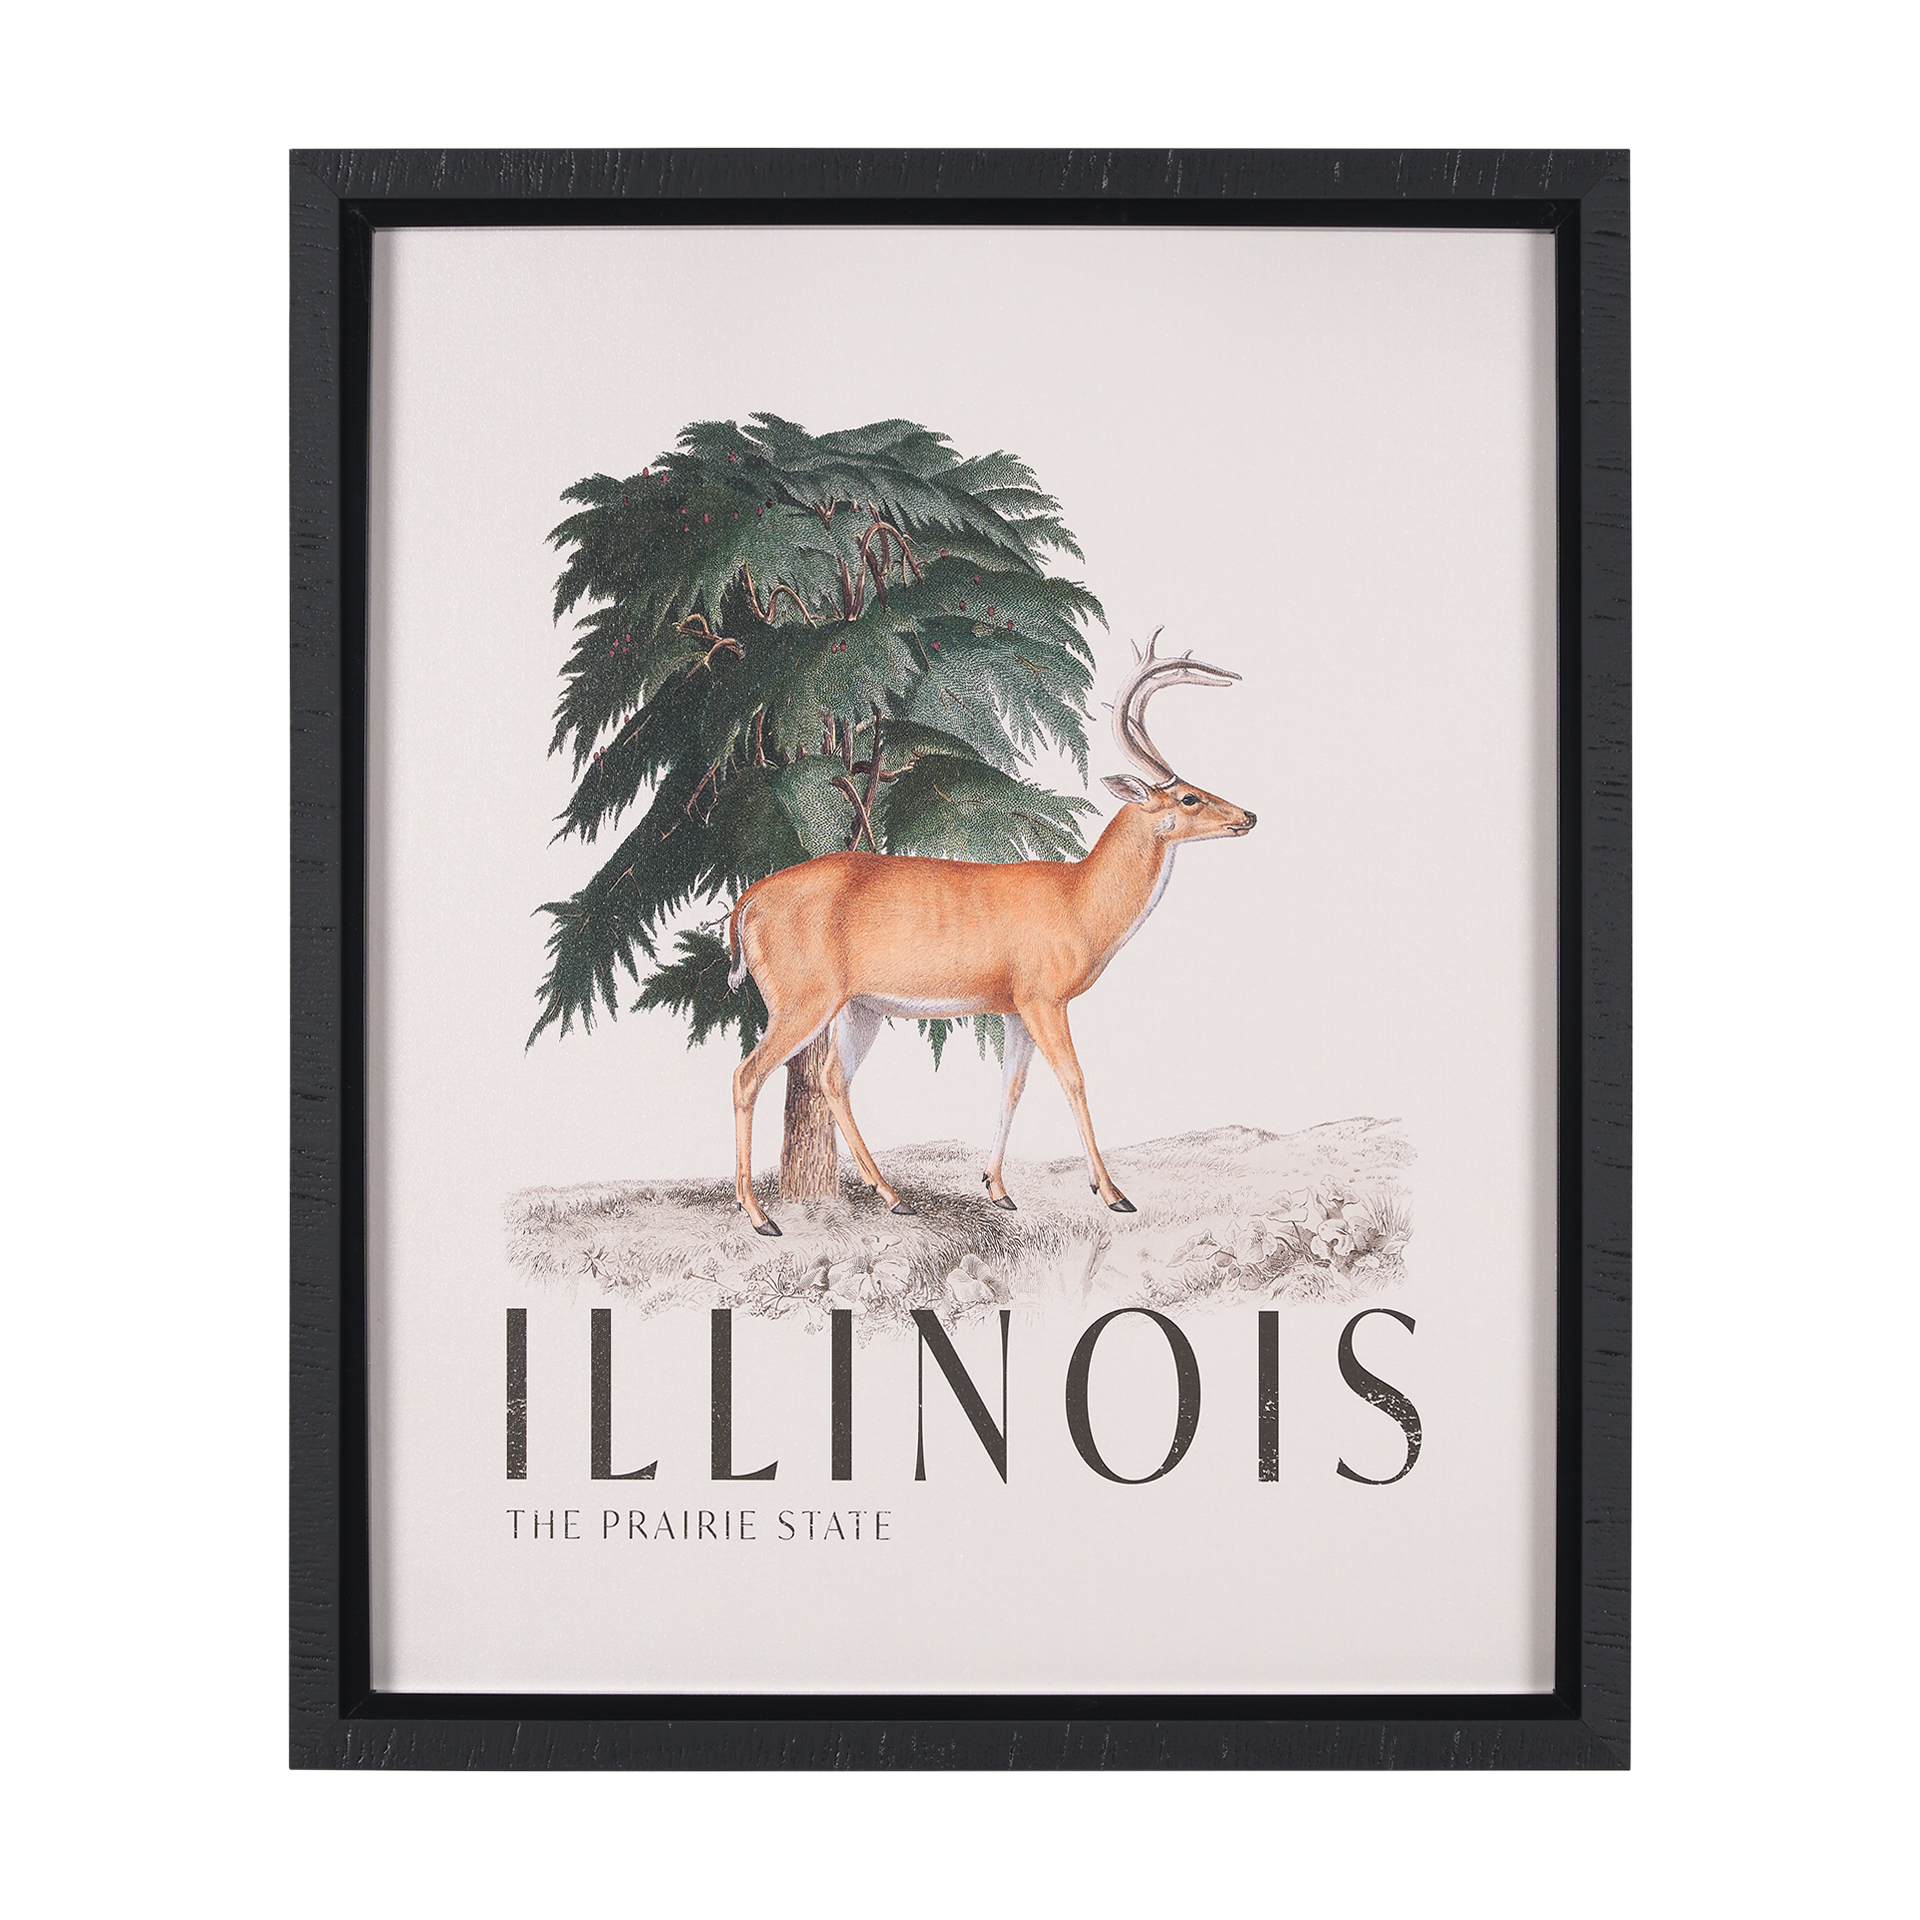 Travel Guide - Illinois (26 x 32)